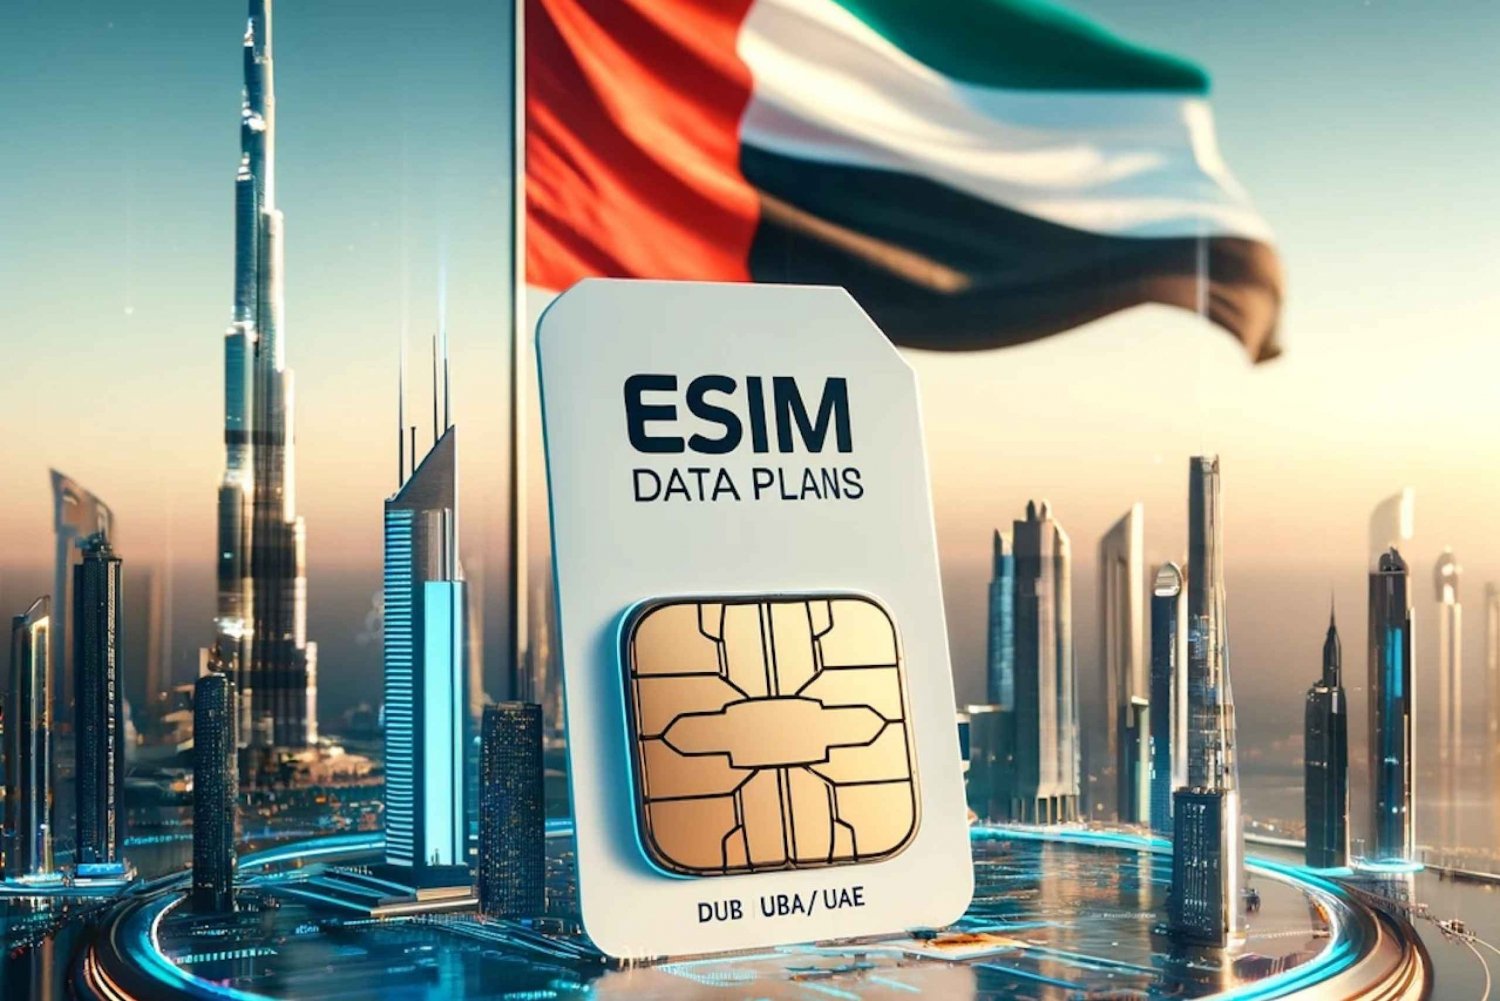 Abu Dhabi : Esim UAE 4G/5G Data Roaming for 7 to 30 Days